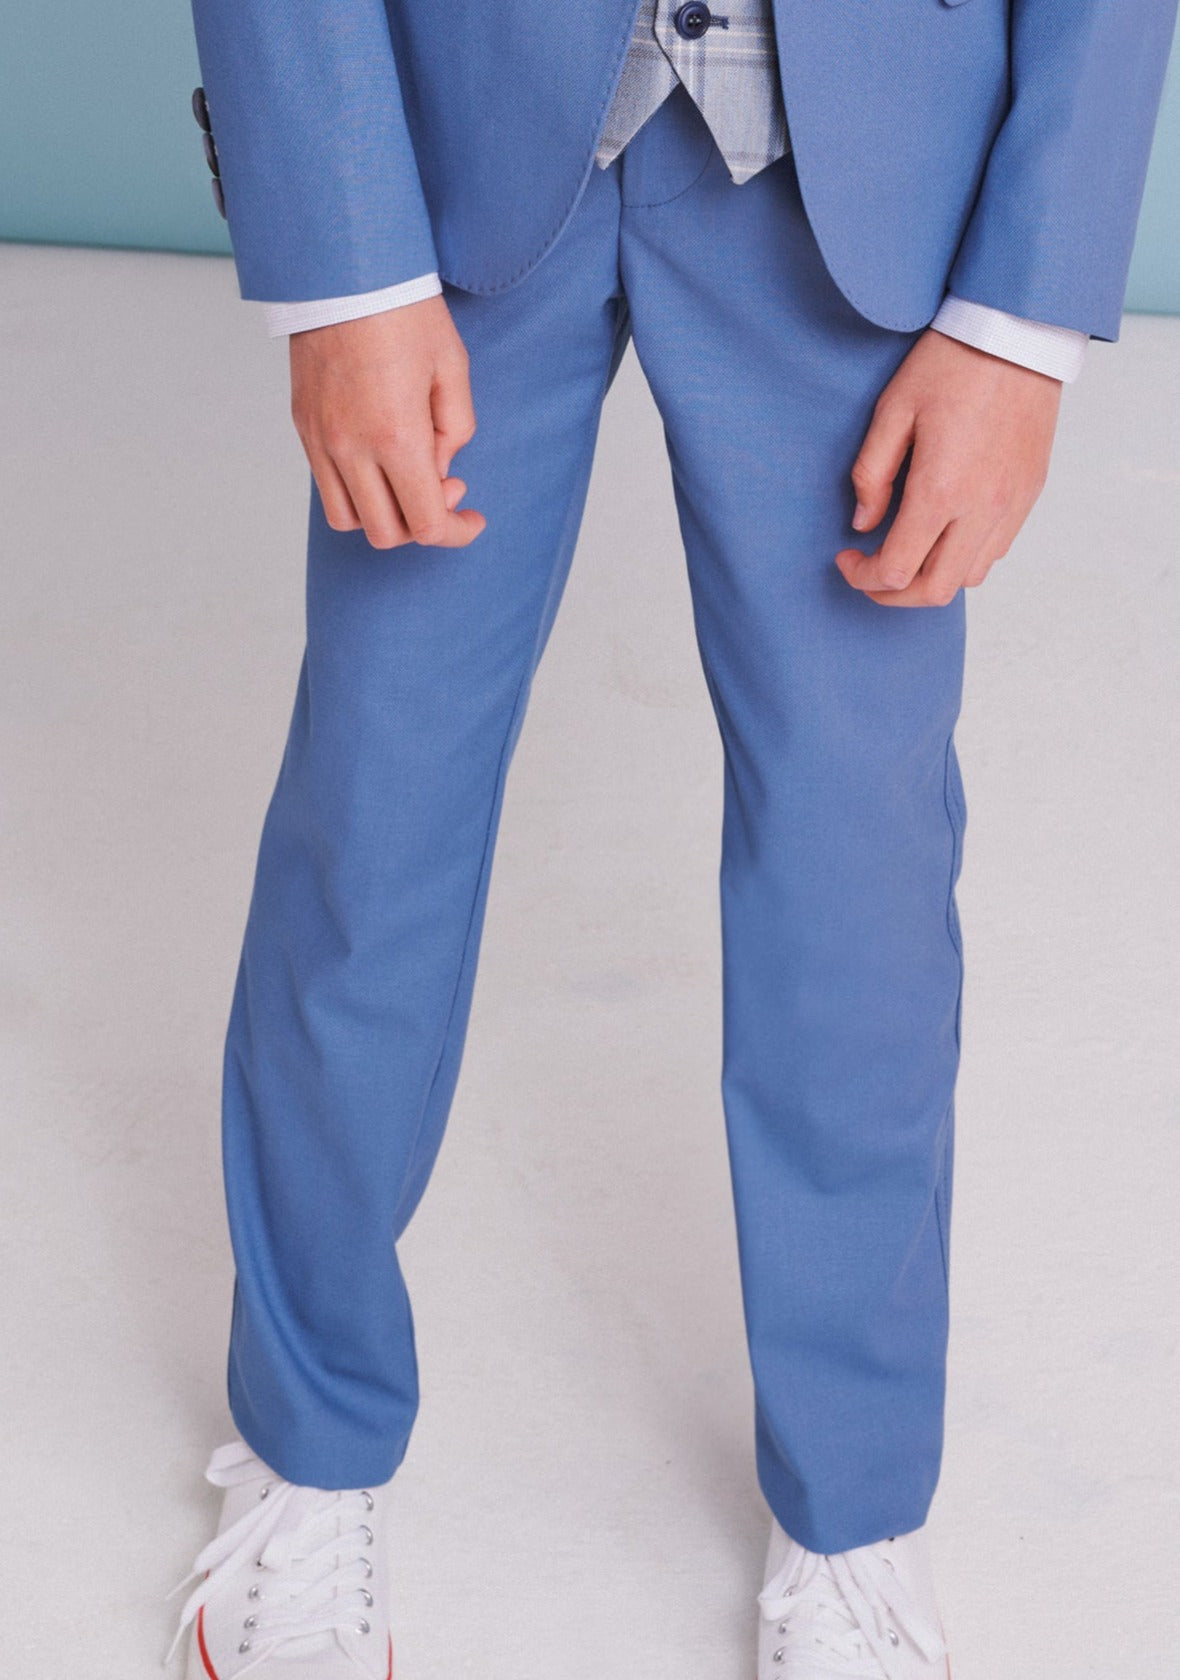 1880 Club Boys Junior Trouser - Greg 75116A Light Blue